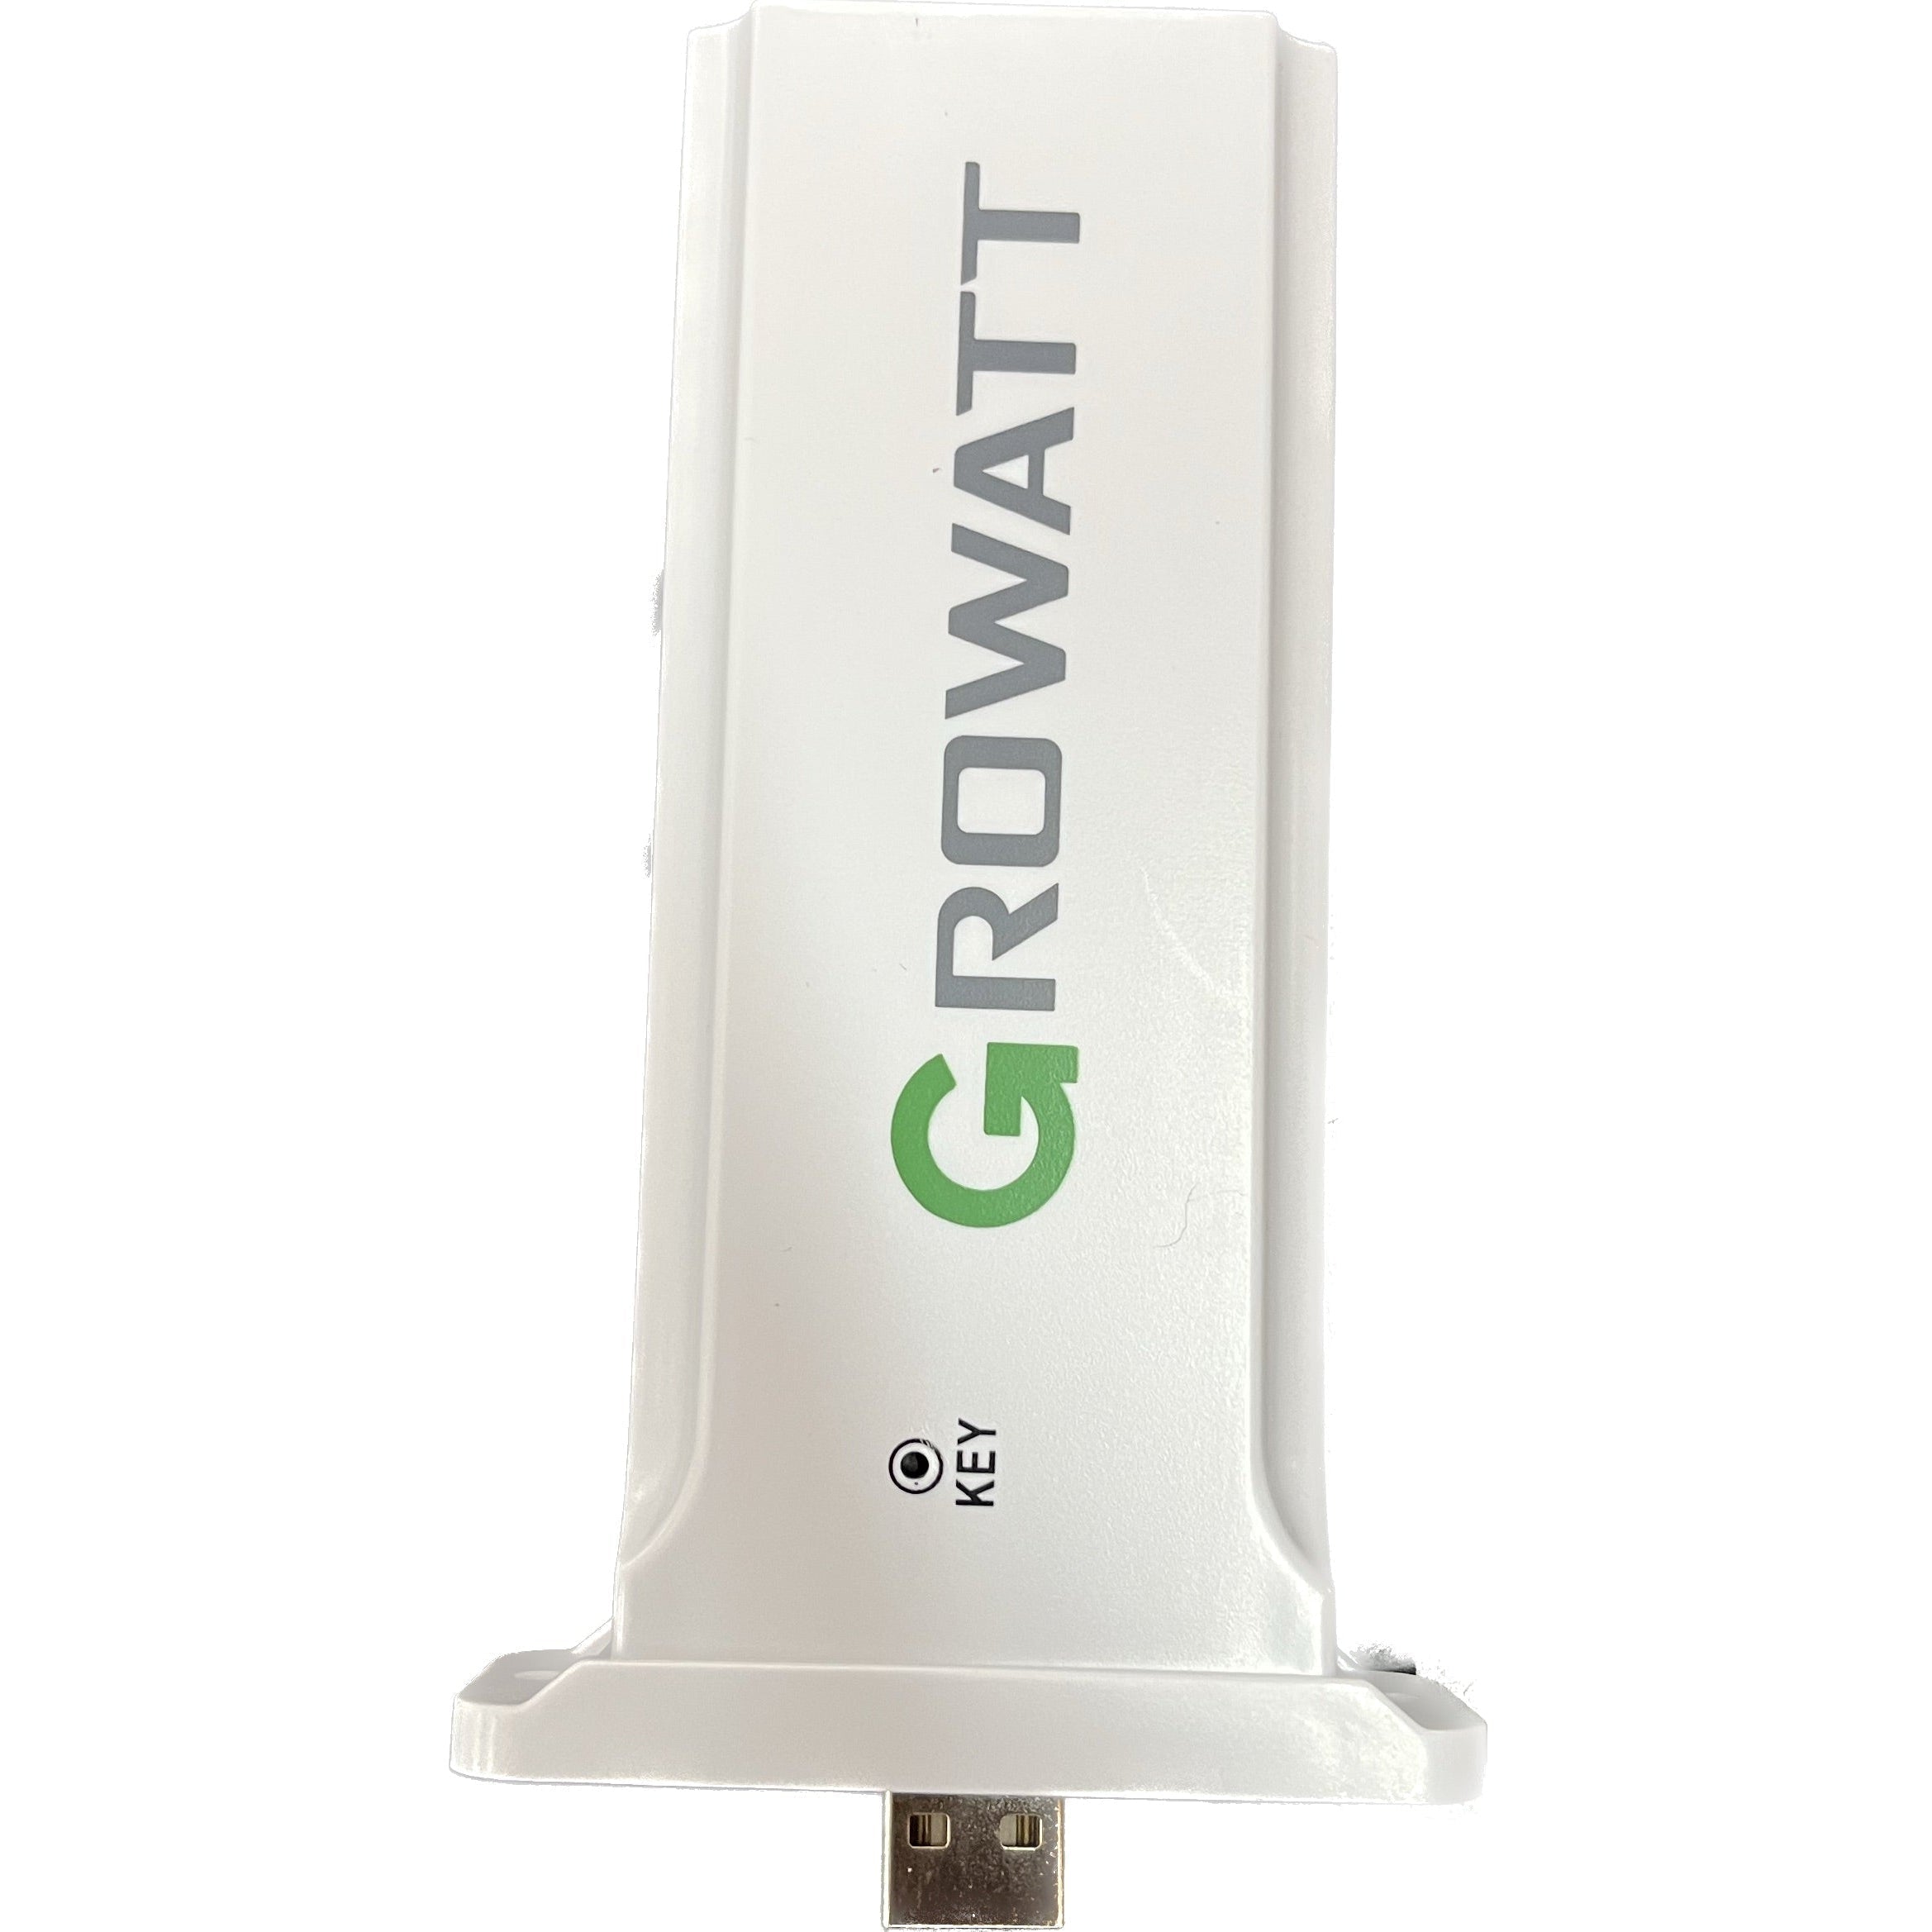 Hybrid Inverter 5𝑘𝑊 Growatt-Growatt-diyshop.co.za